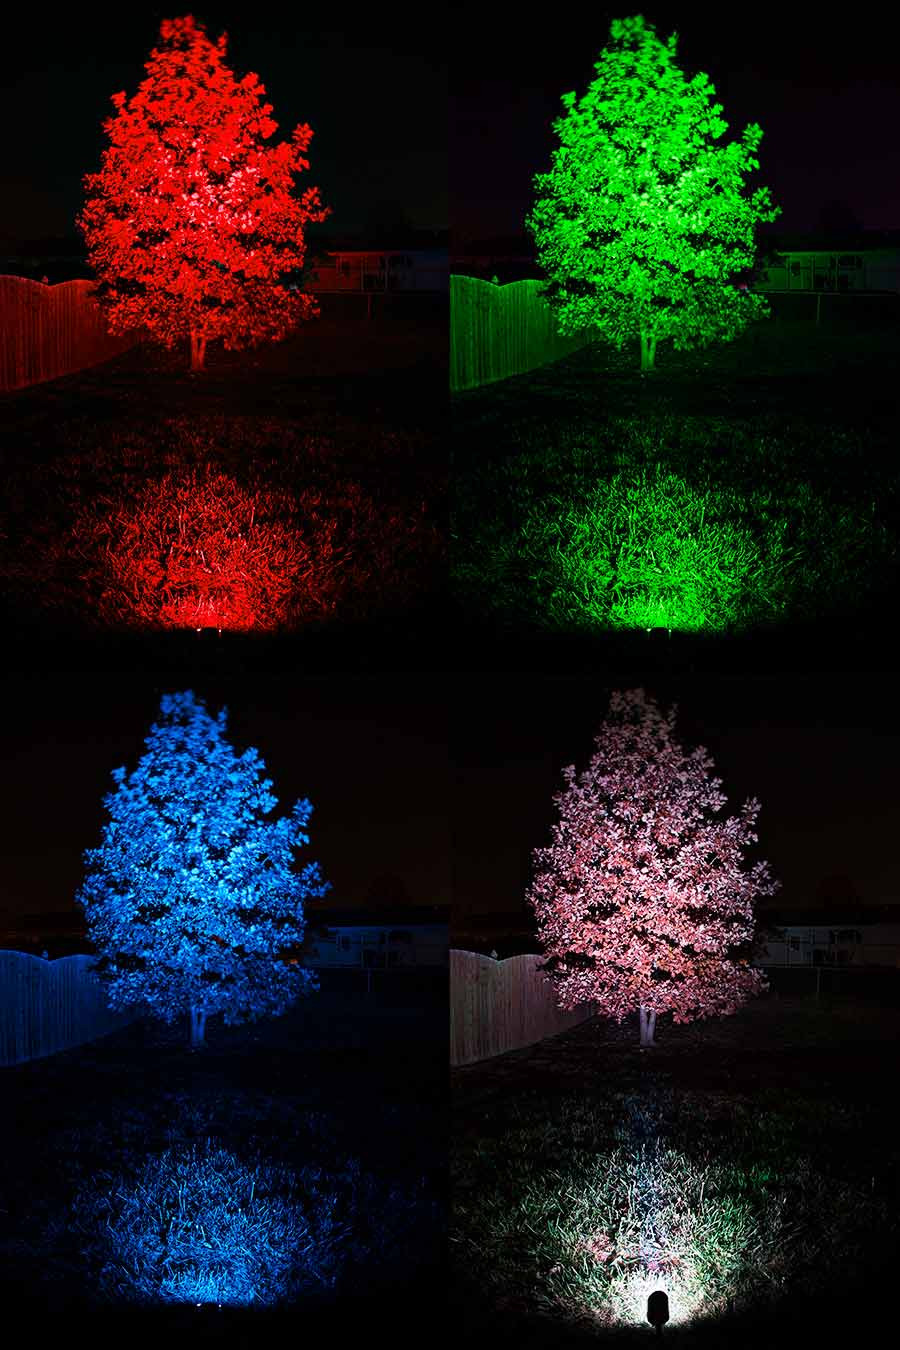 Best ideas about Led Landscape Lights
. Save or Pin 18W Color Changing RGB LED Landscape Spotlight 40 Watt Now.